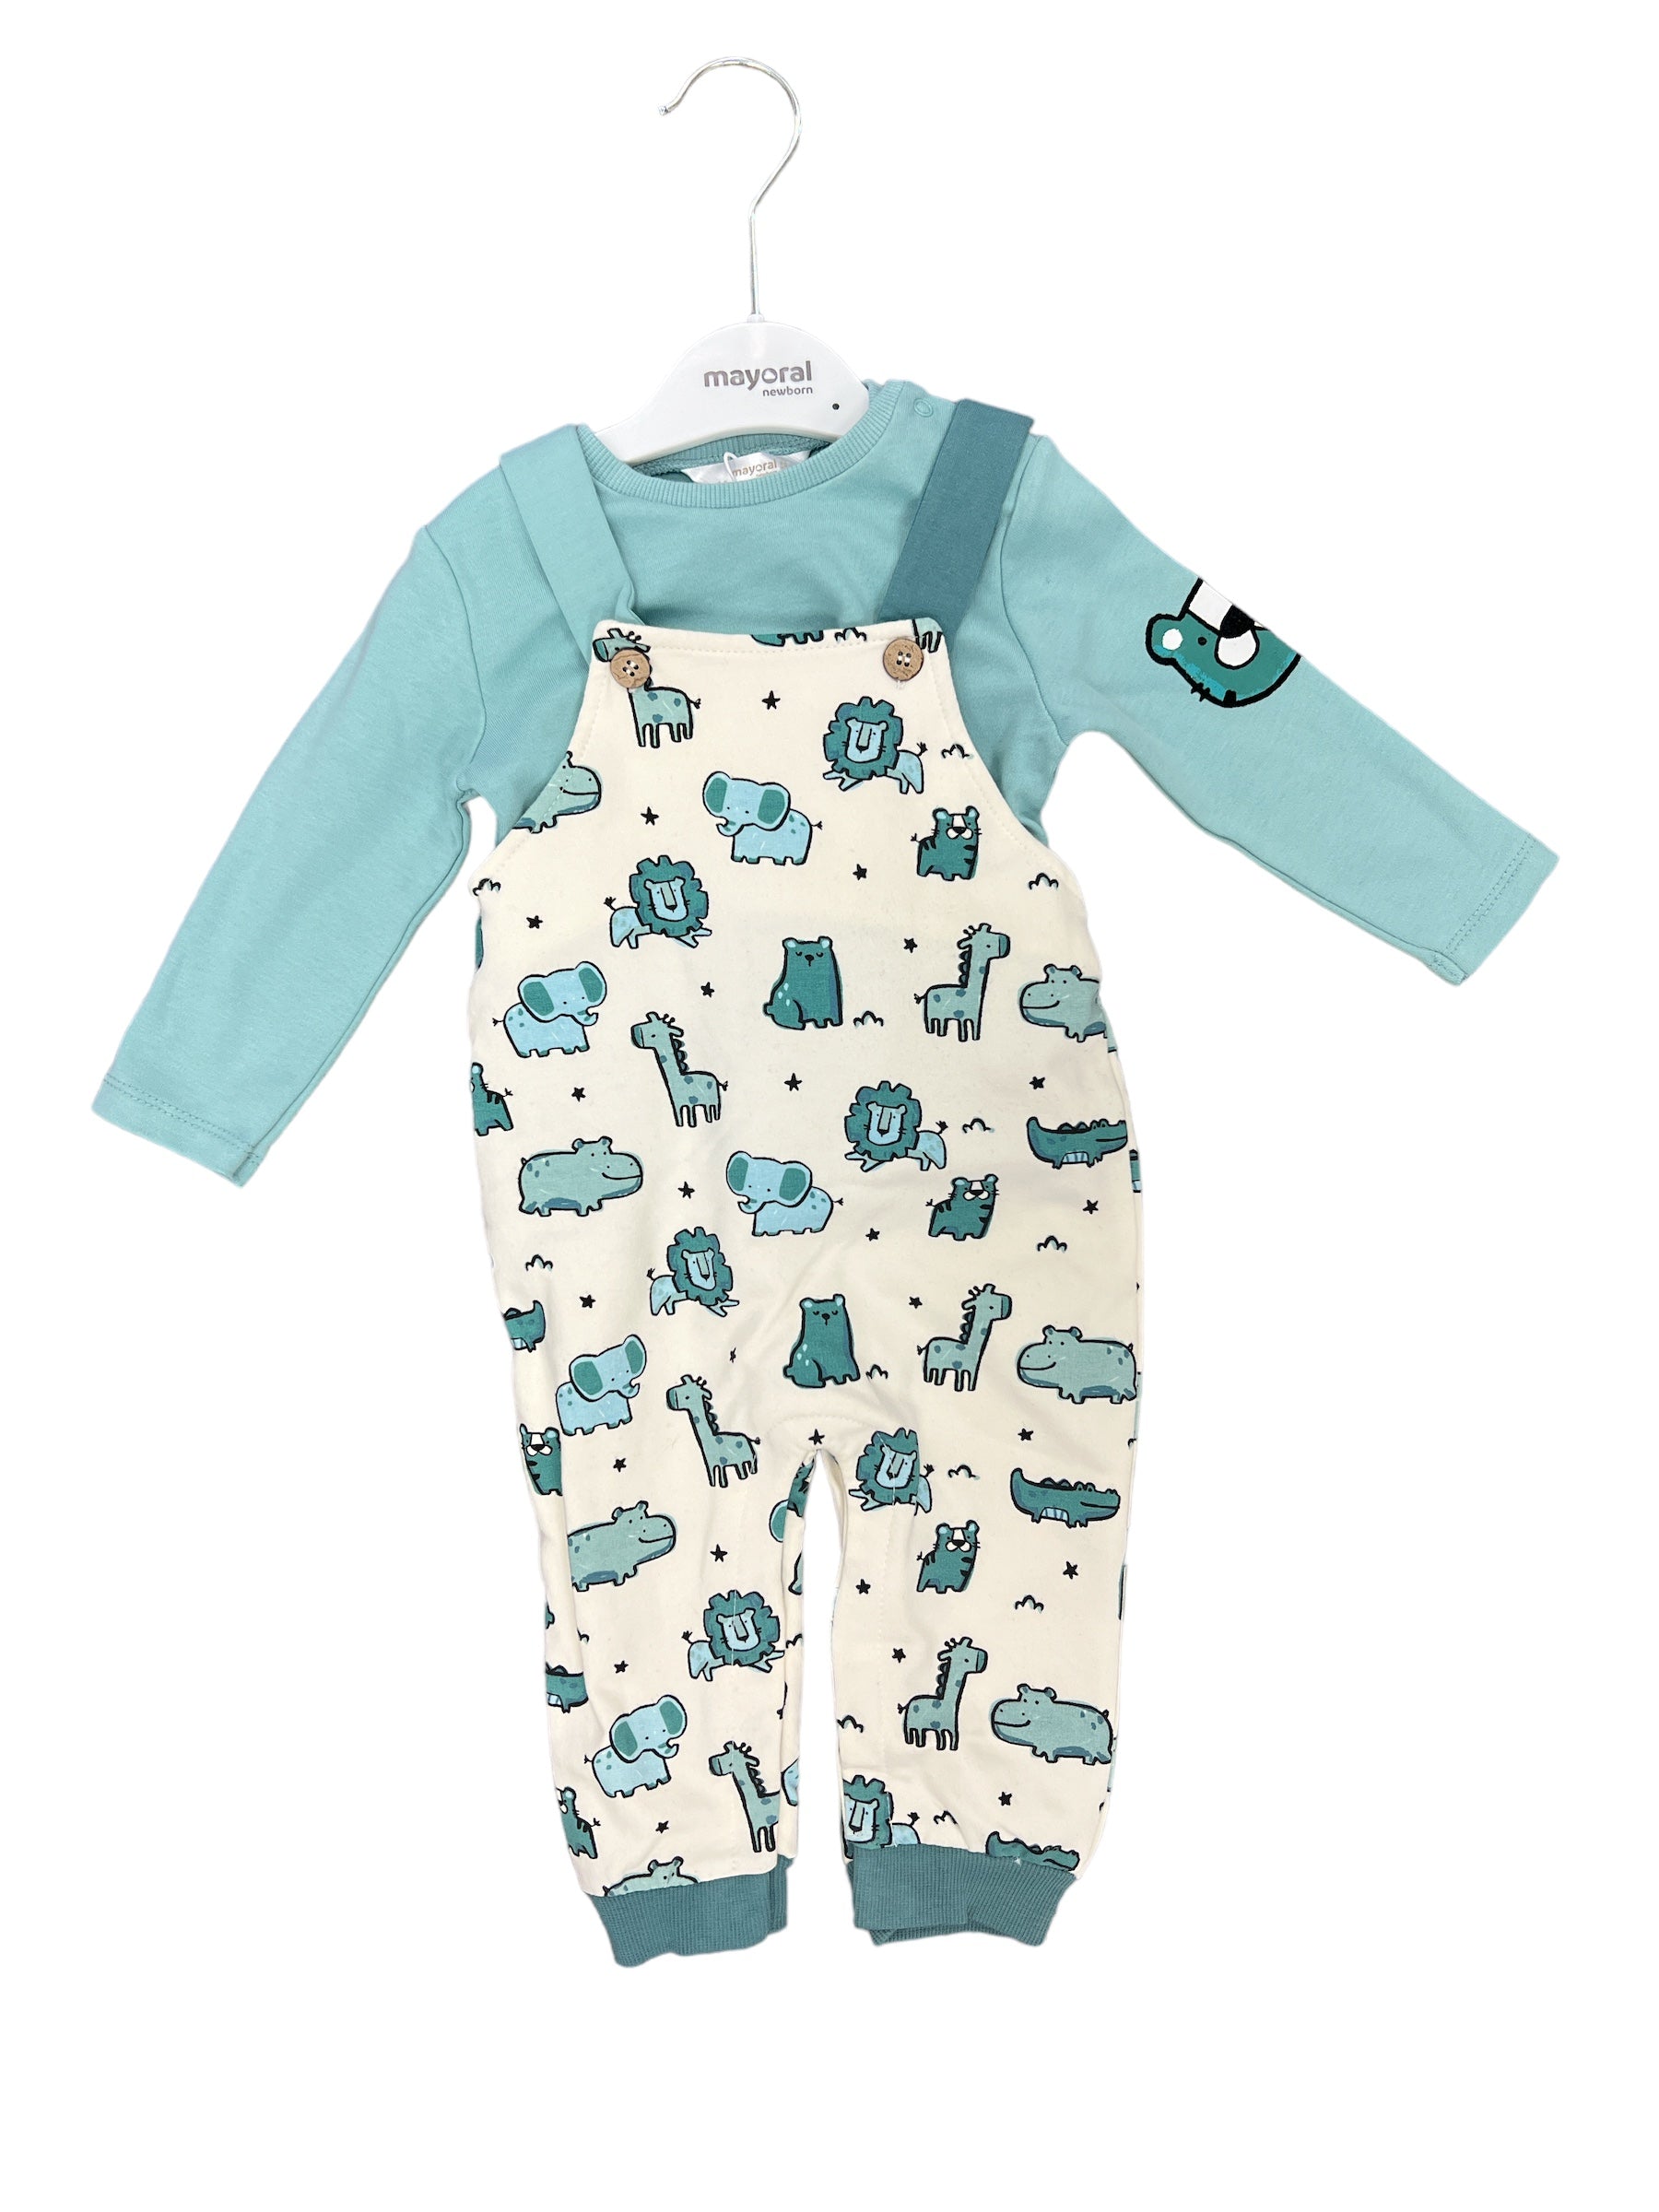 Safari Overall Set-520 Baby & Kids Gifts-Simply Stylish Boutique-Simply Stylish Boutique | Women’s & Kid’s Fashion | Paducah, KY